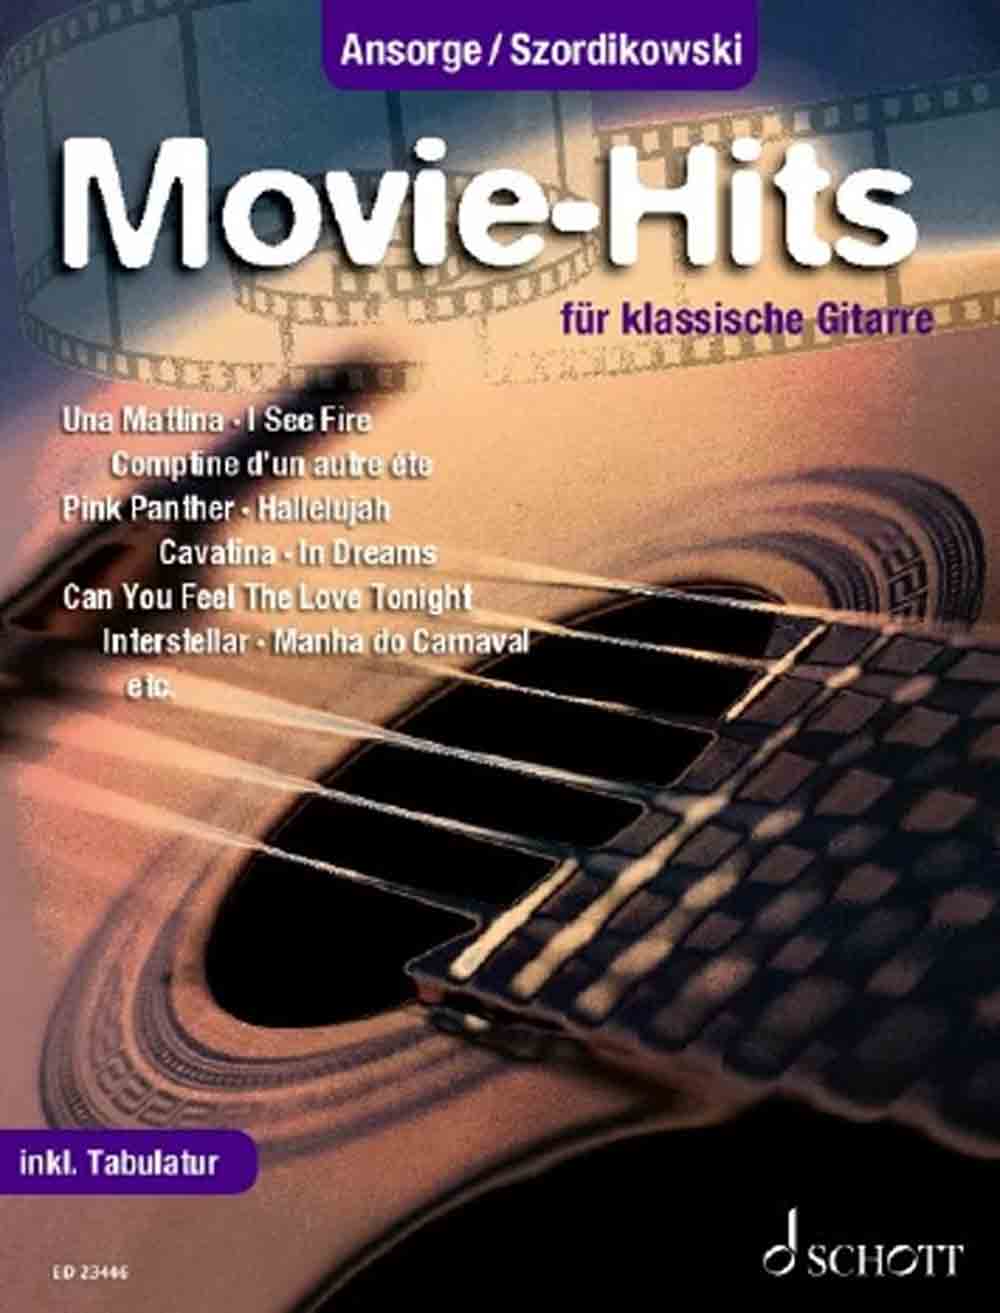 Schott Music Group, Film ab! 20 Film Klassiker arrangiert für klassische Gitarre